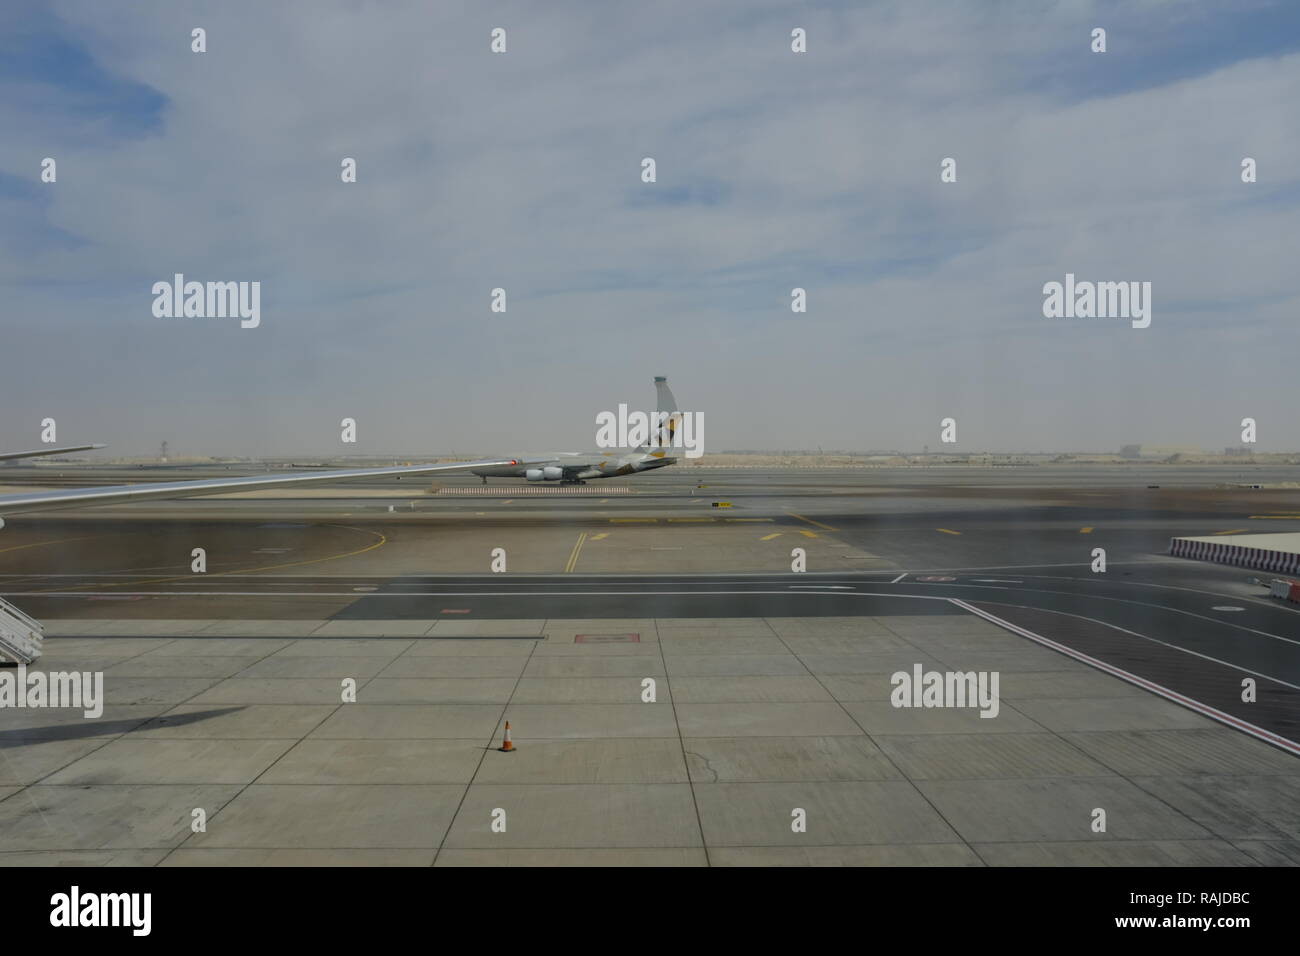 Airplane belongs to Etihad Airline in Abu Dhabi Airport, UAE Stock Photo